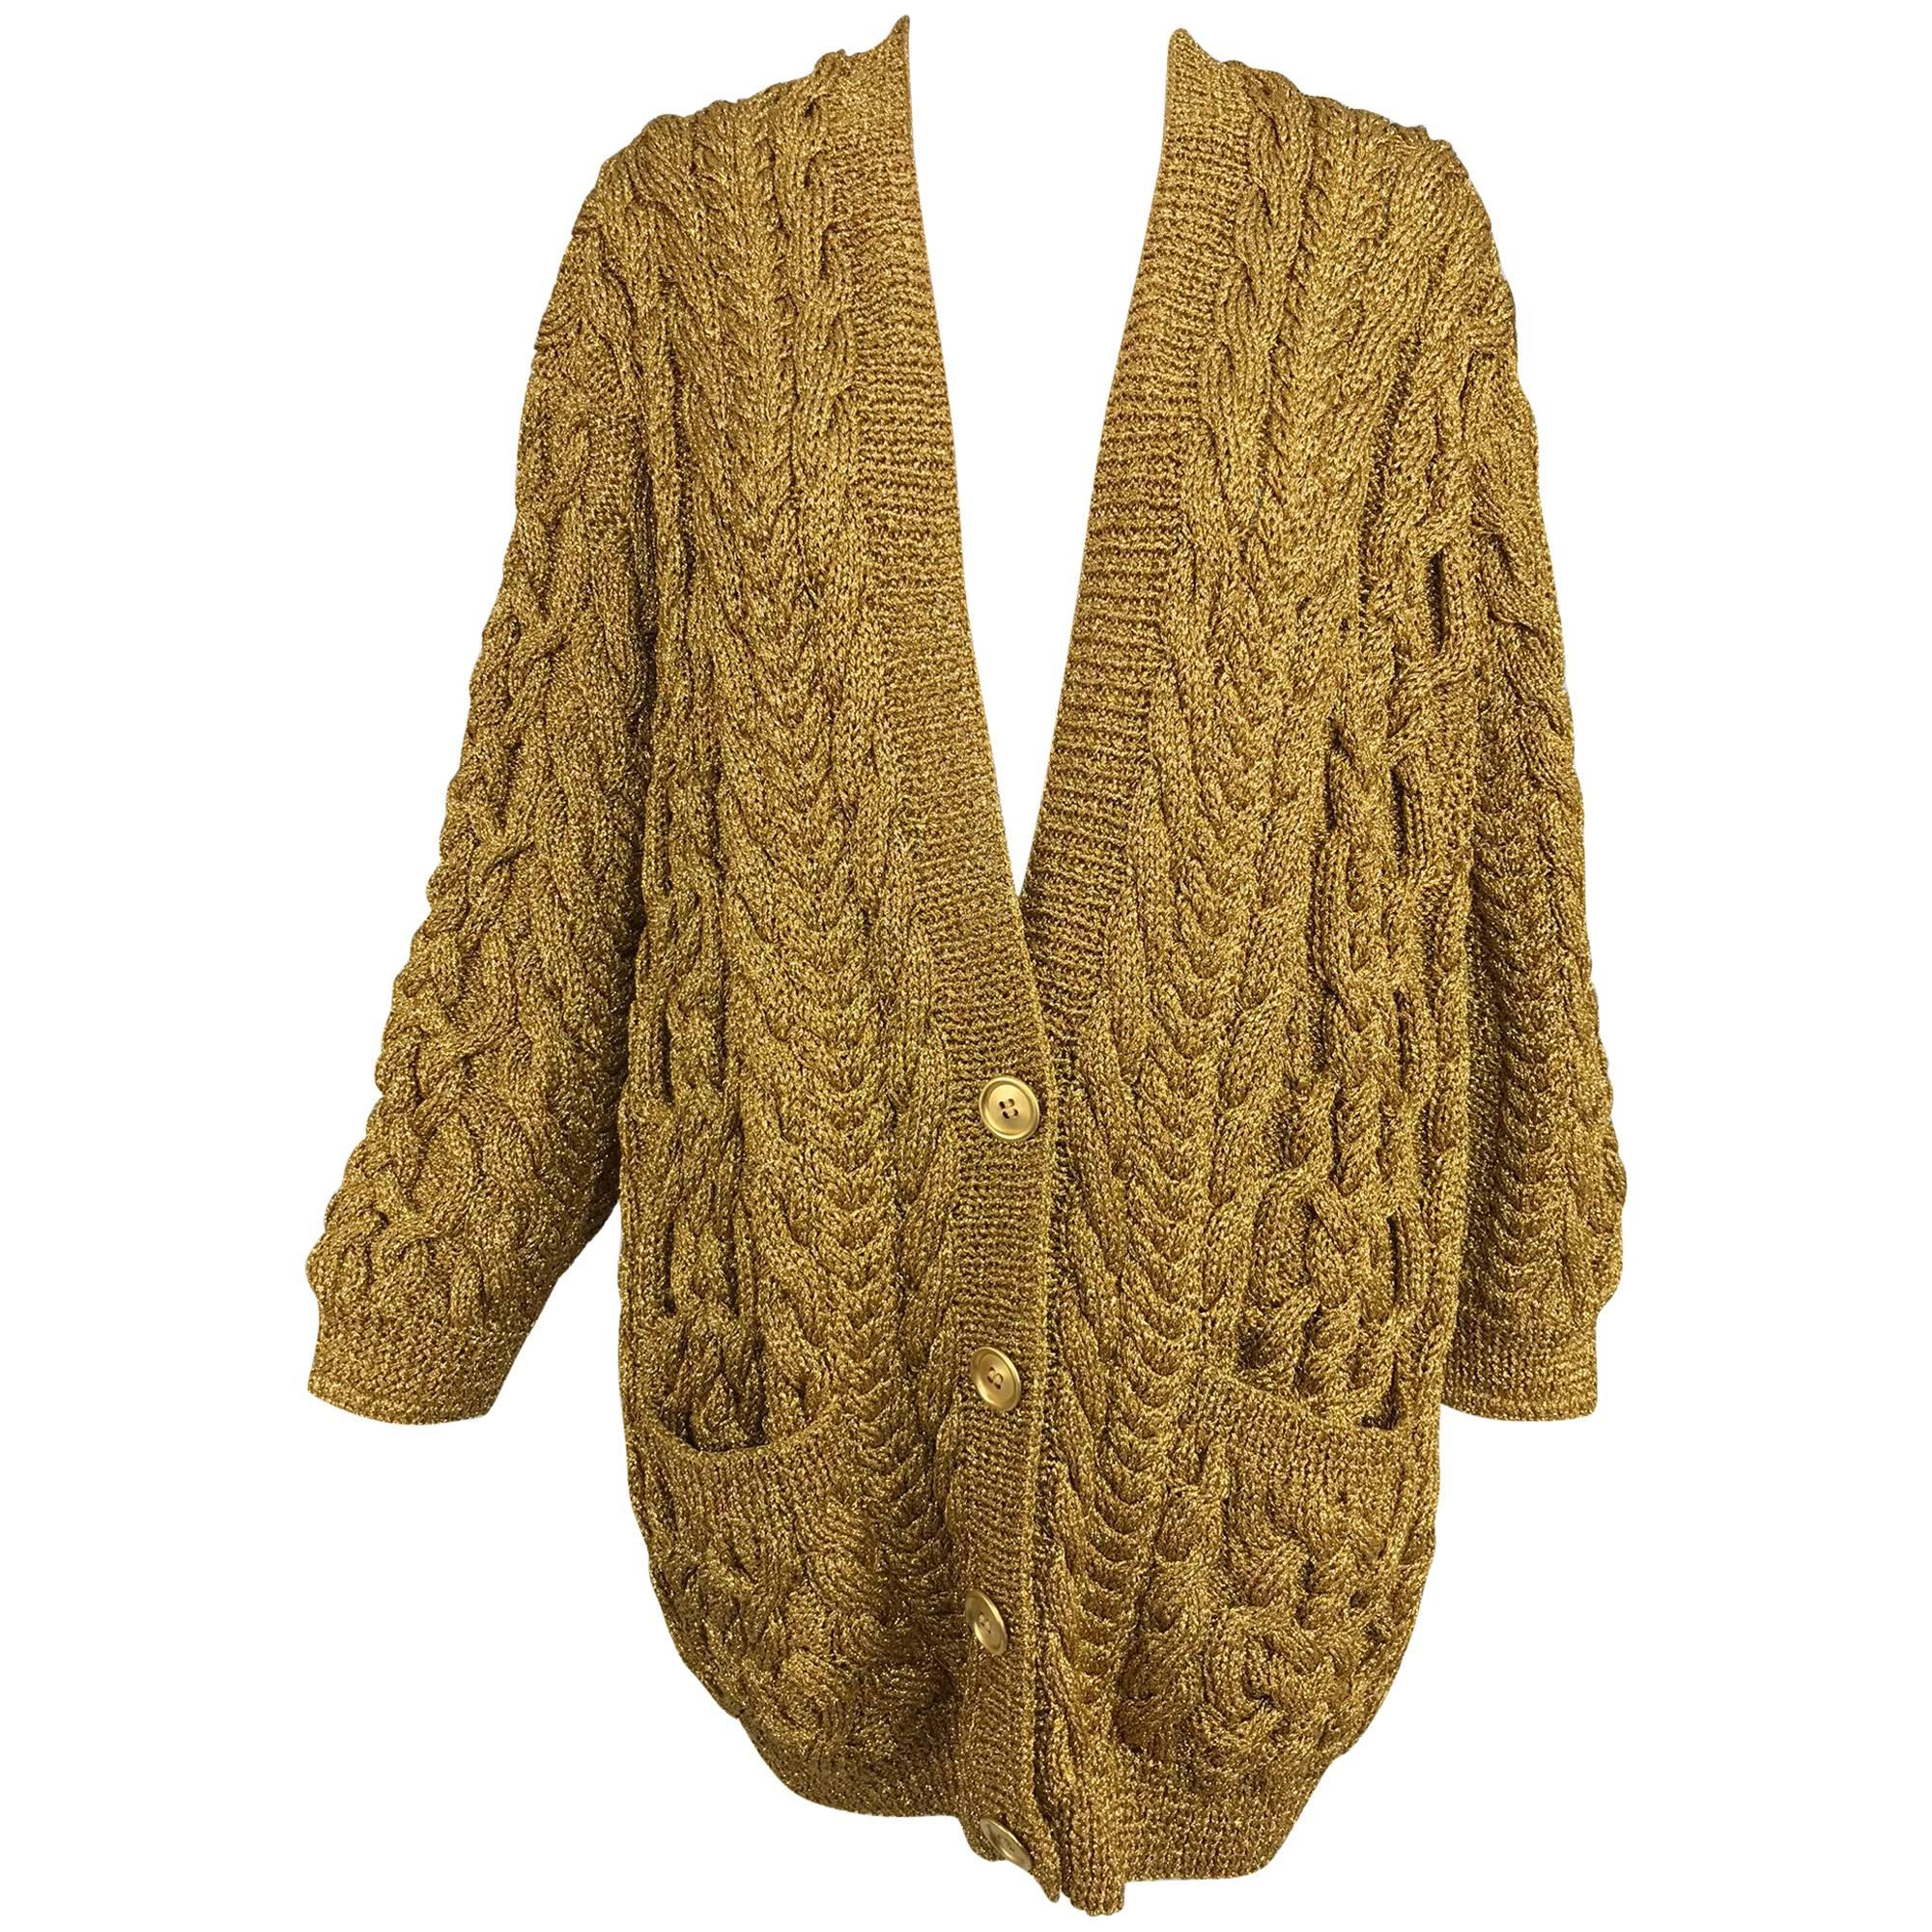 Anne Klein chunky gold metallic knit cardigan sweater 1990s